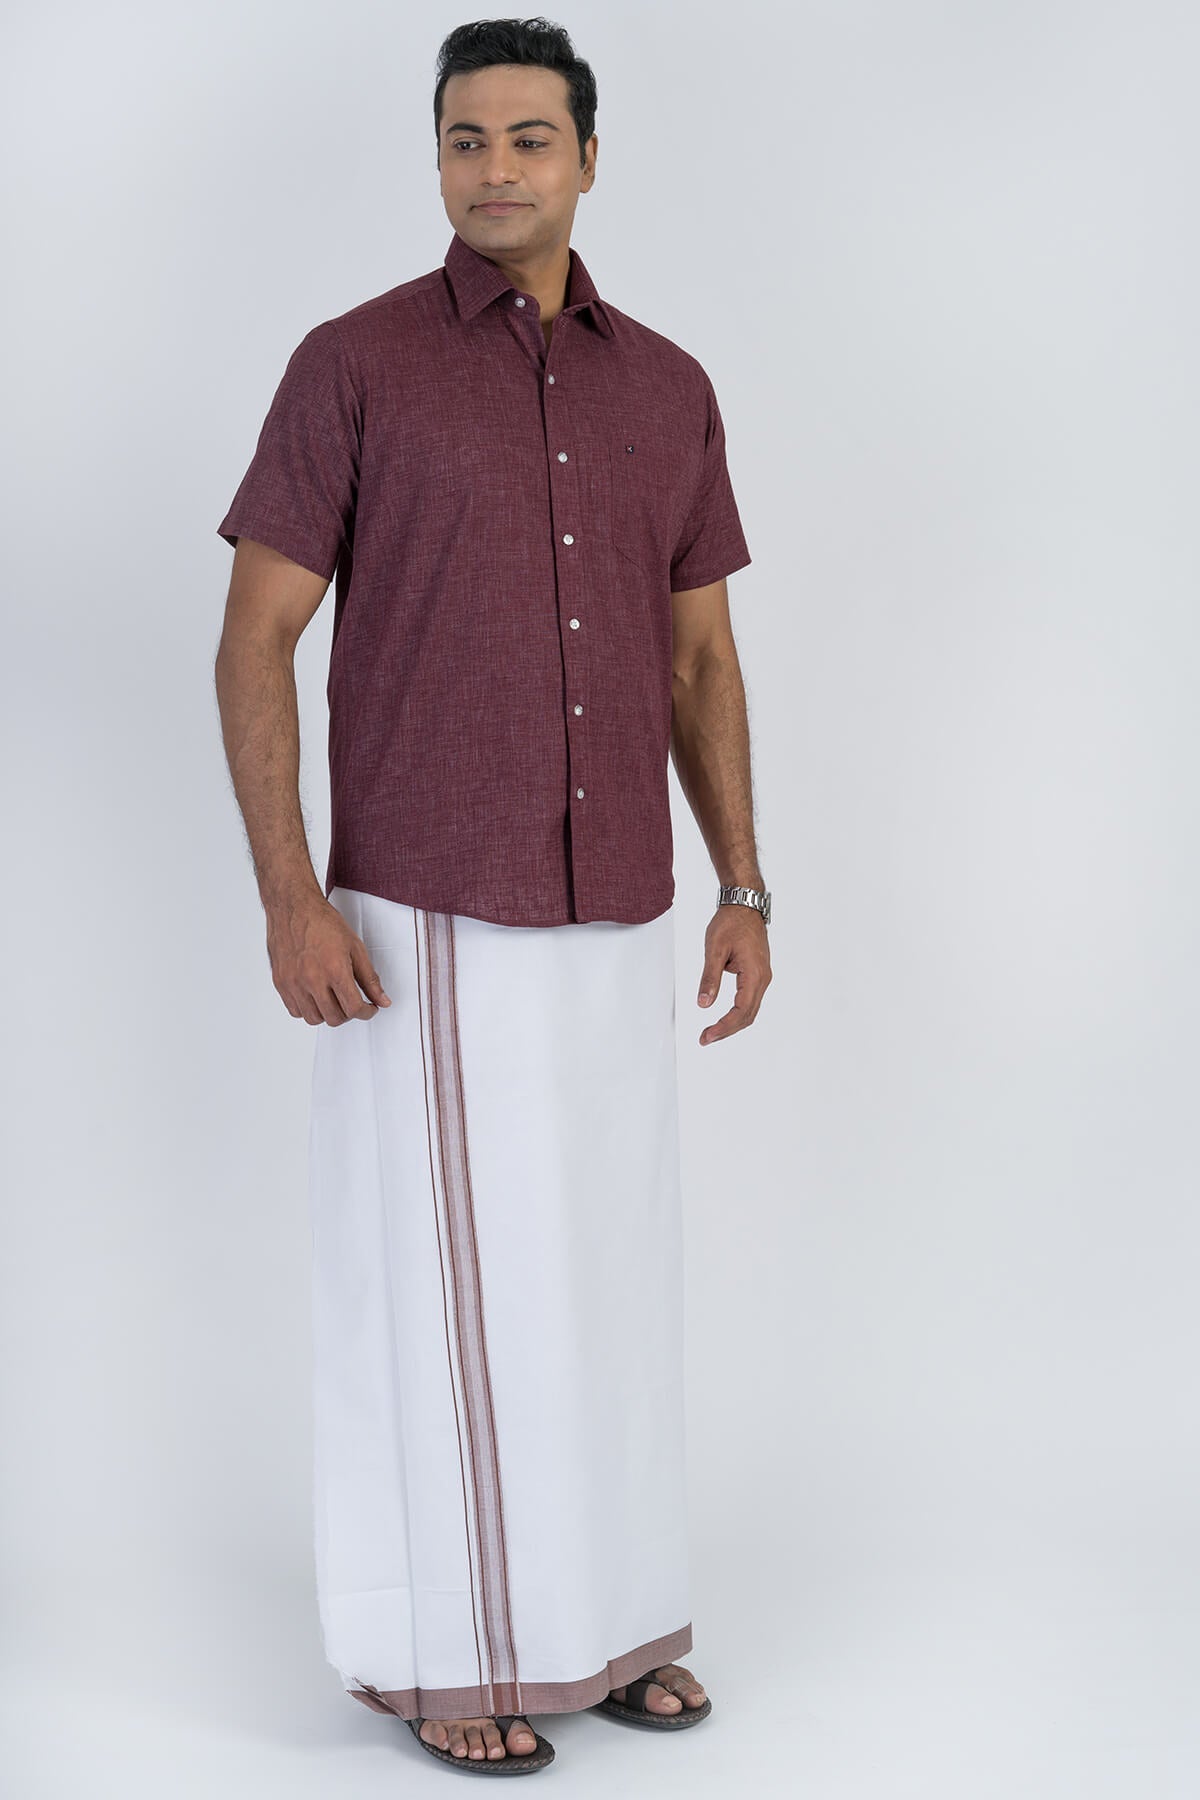 Combo Men's Premium Cotton Dhoti with Brown Shirt